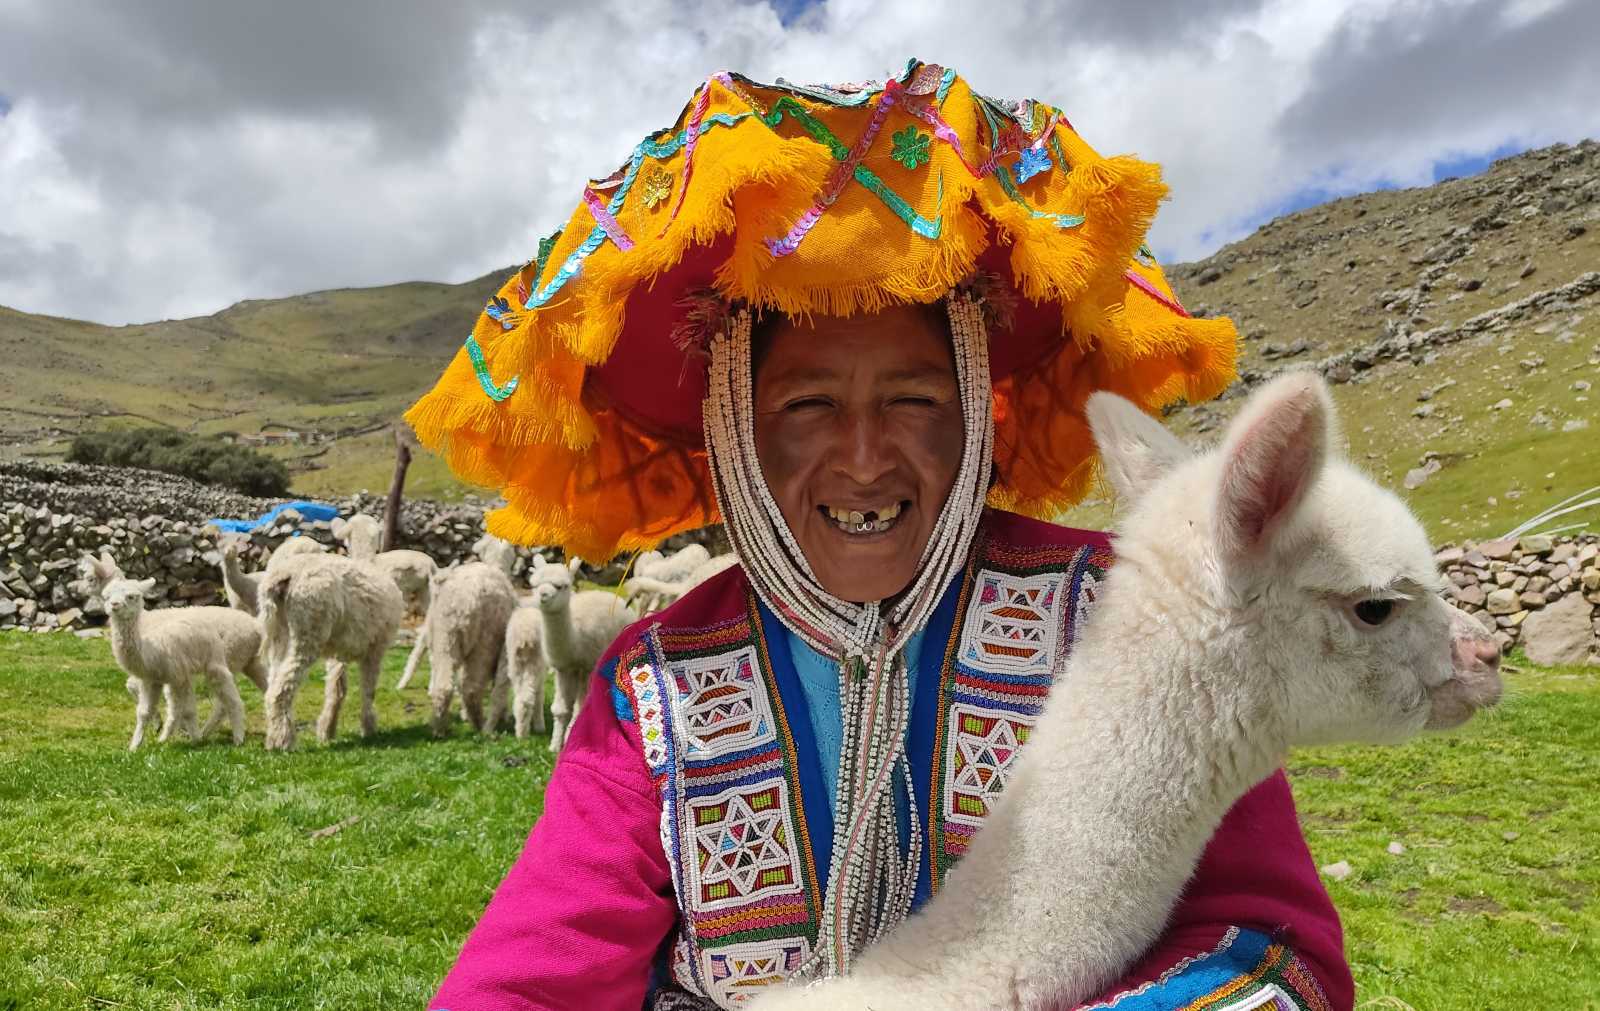 Hats of the women of Cusco